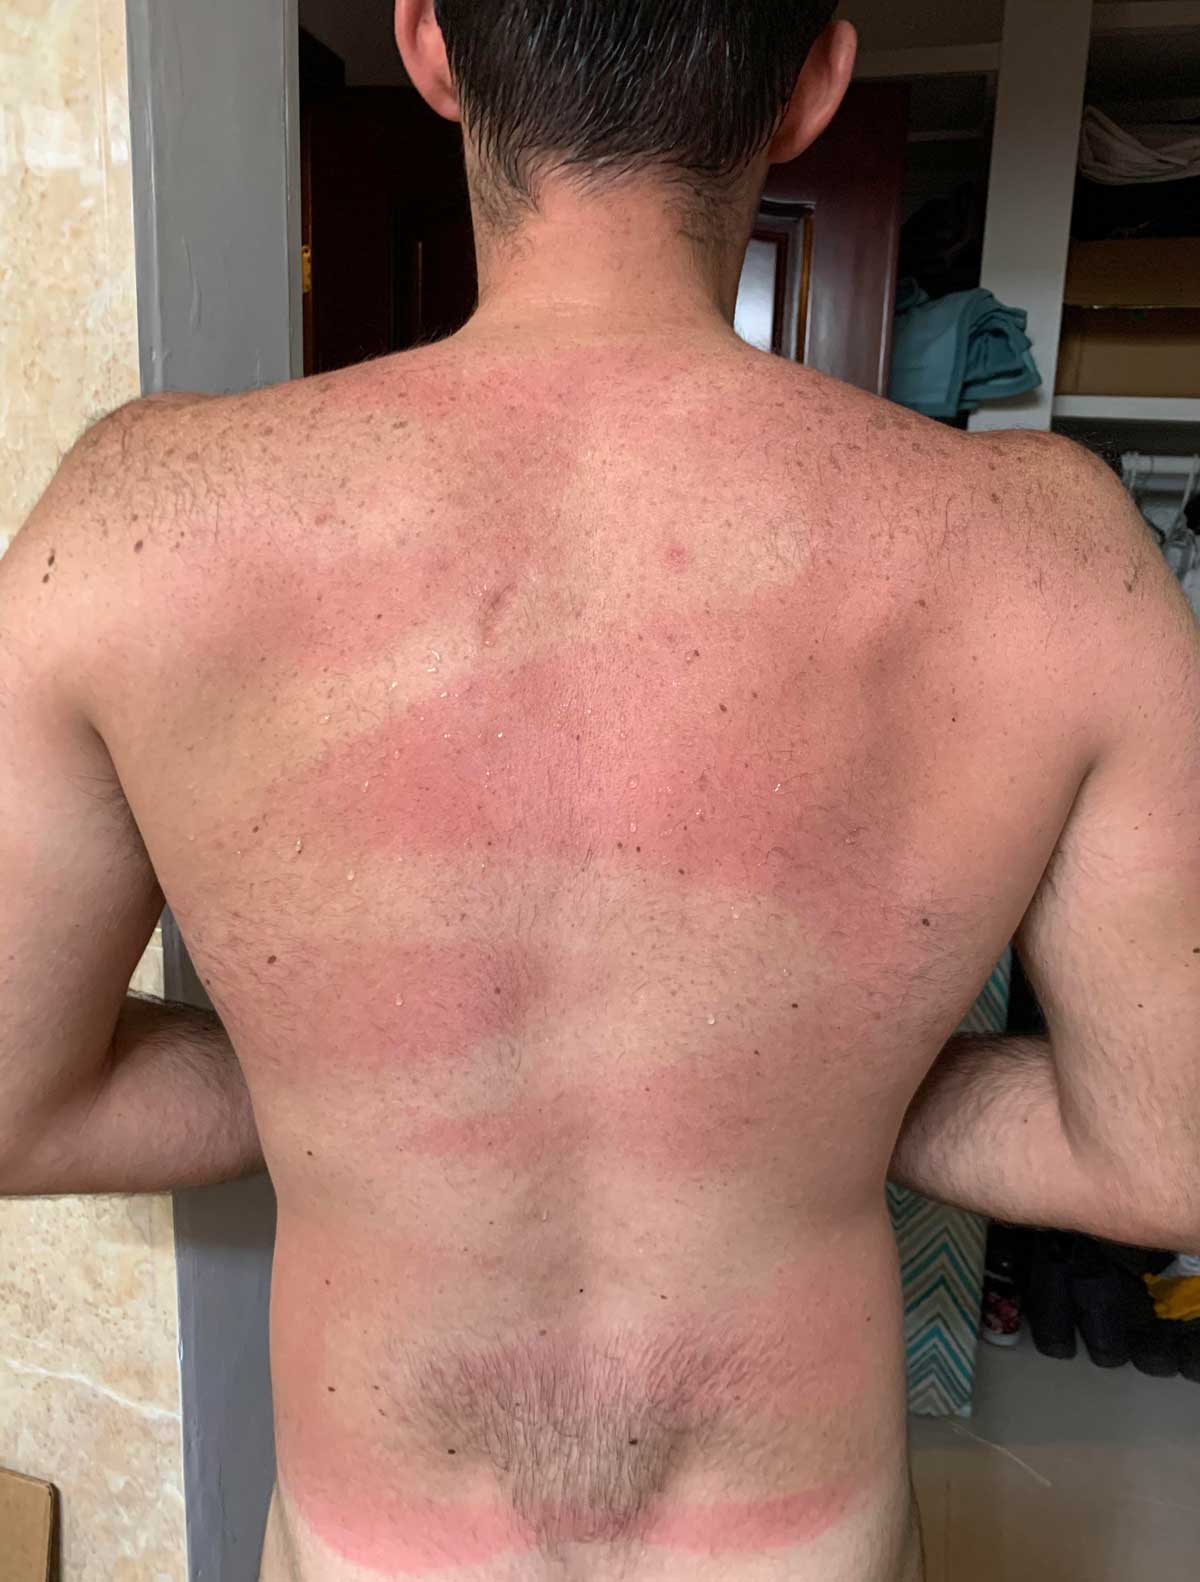 Wife helped spray sunscreen on my back..